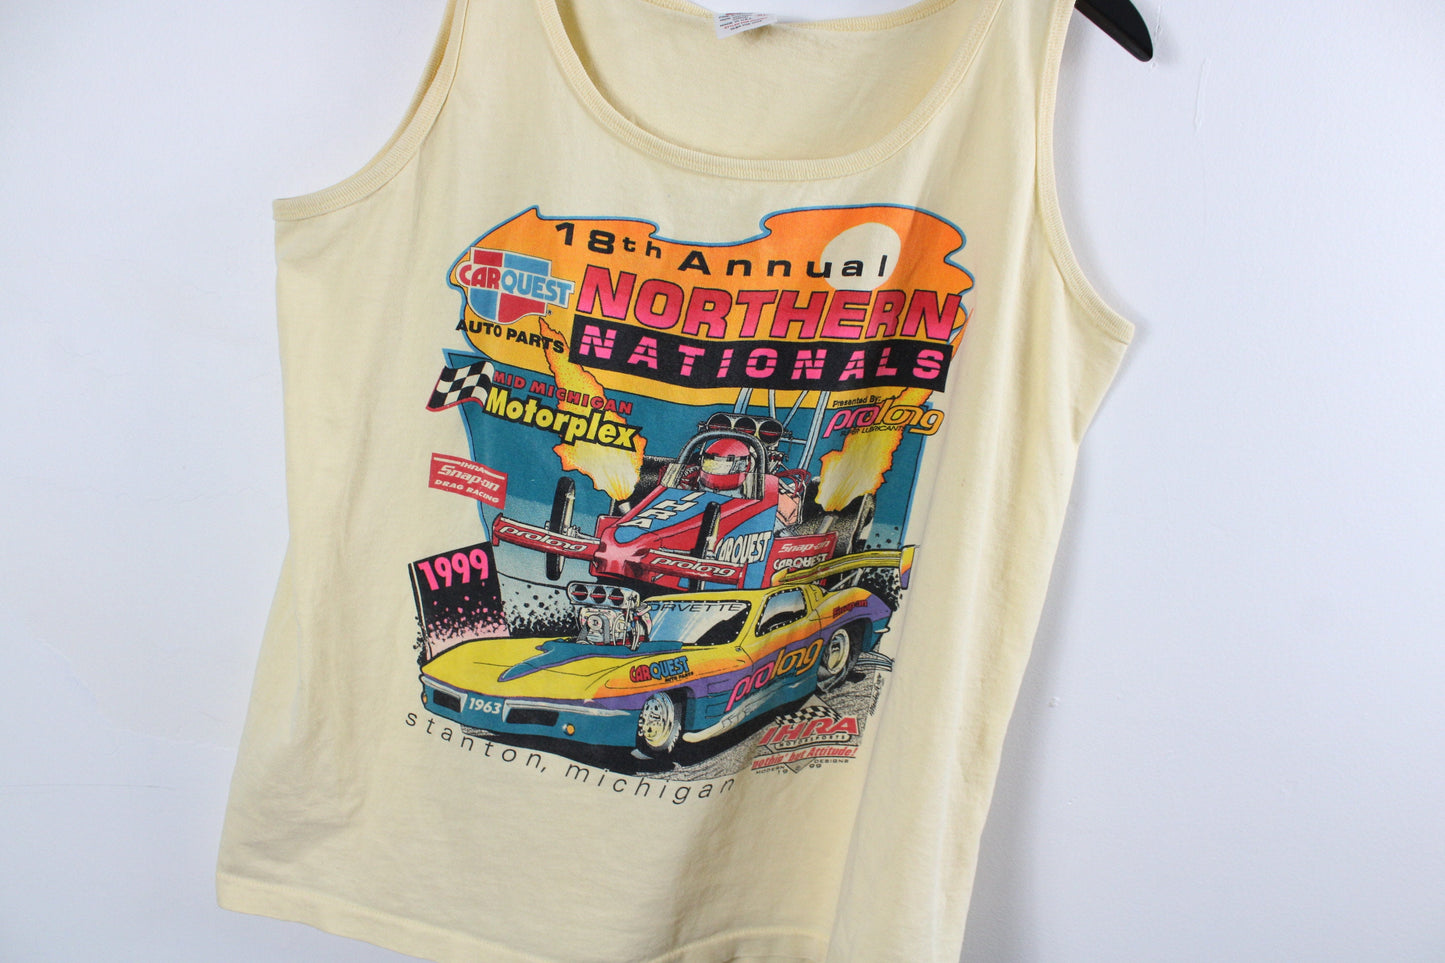 Car-Show T-Shirt / Vintage Racing Tee Shirt / Motor-Sports Speedway Race Car Graphic